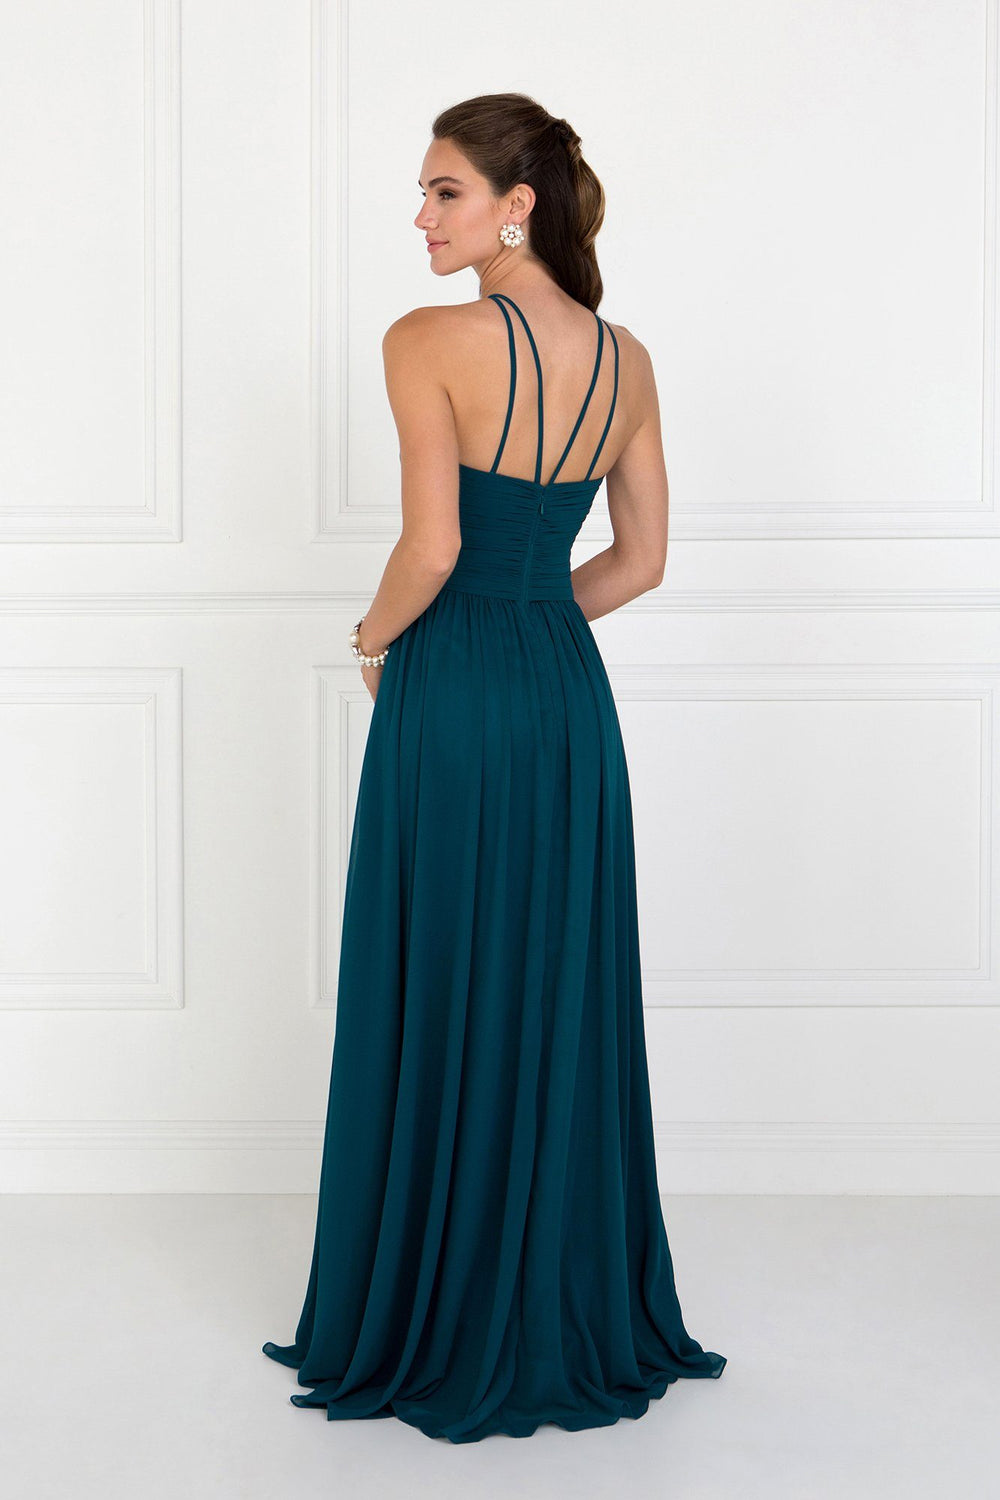 Chiffon High-Neck Ruched Long Mauve Dress by Elizabeth K GL1524-Long Formal Dresses-ABC Fashion